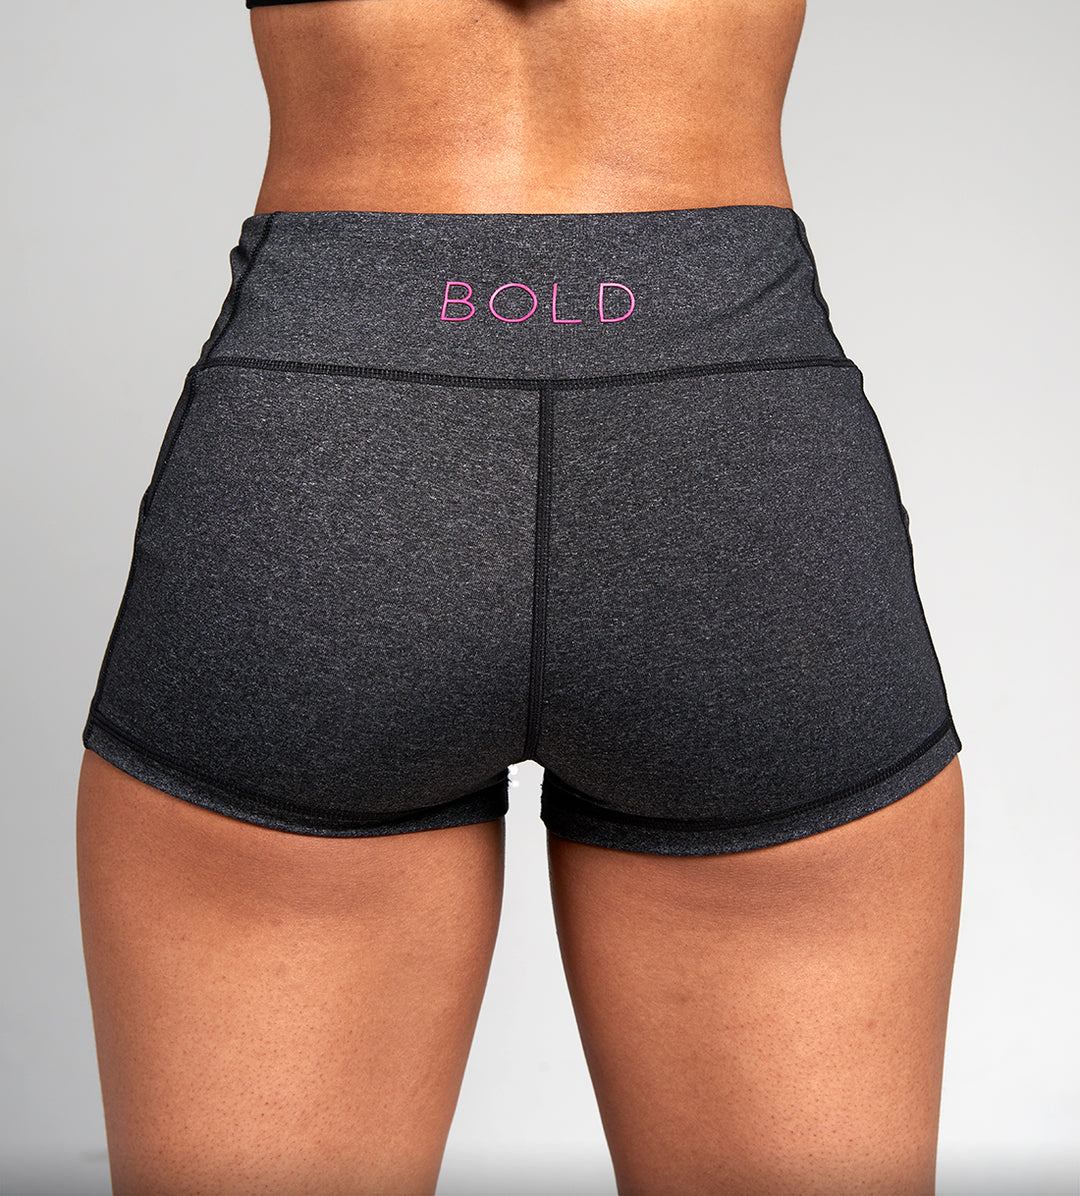 BOLD Training Shorts with Pockets